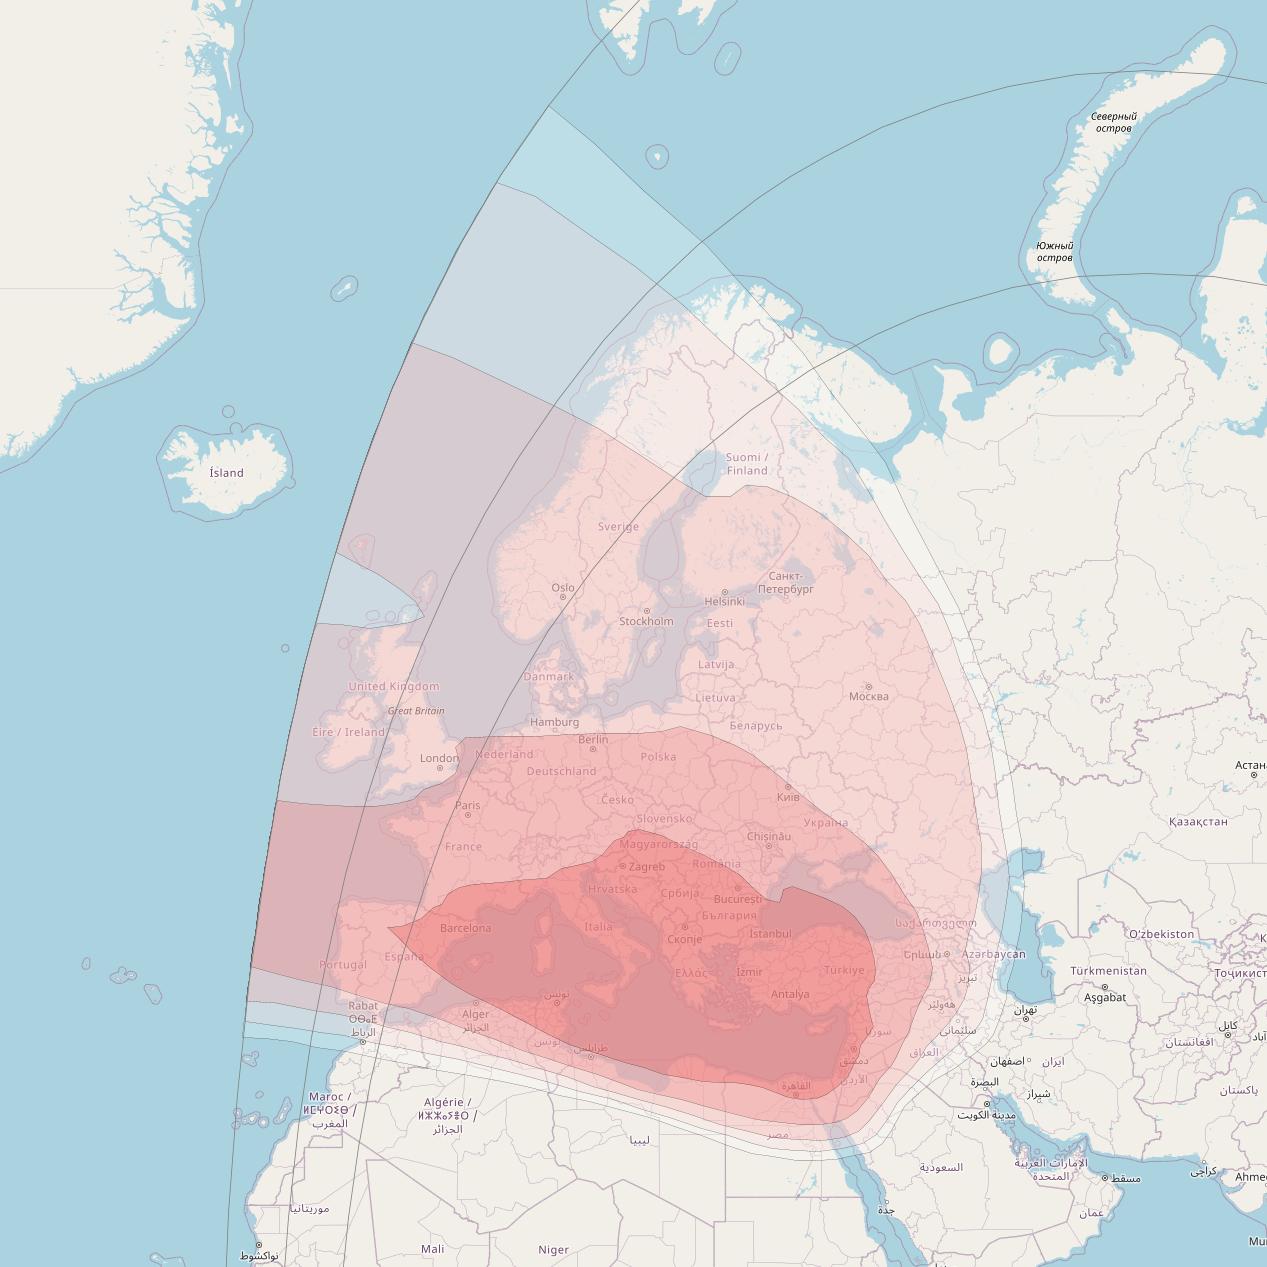 Intelsat 39 at 62° E downlink Ku-band Europe beam coverage map